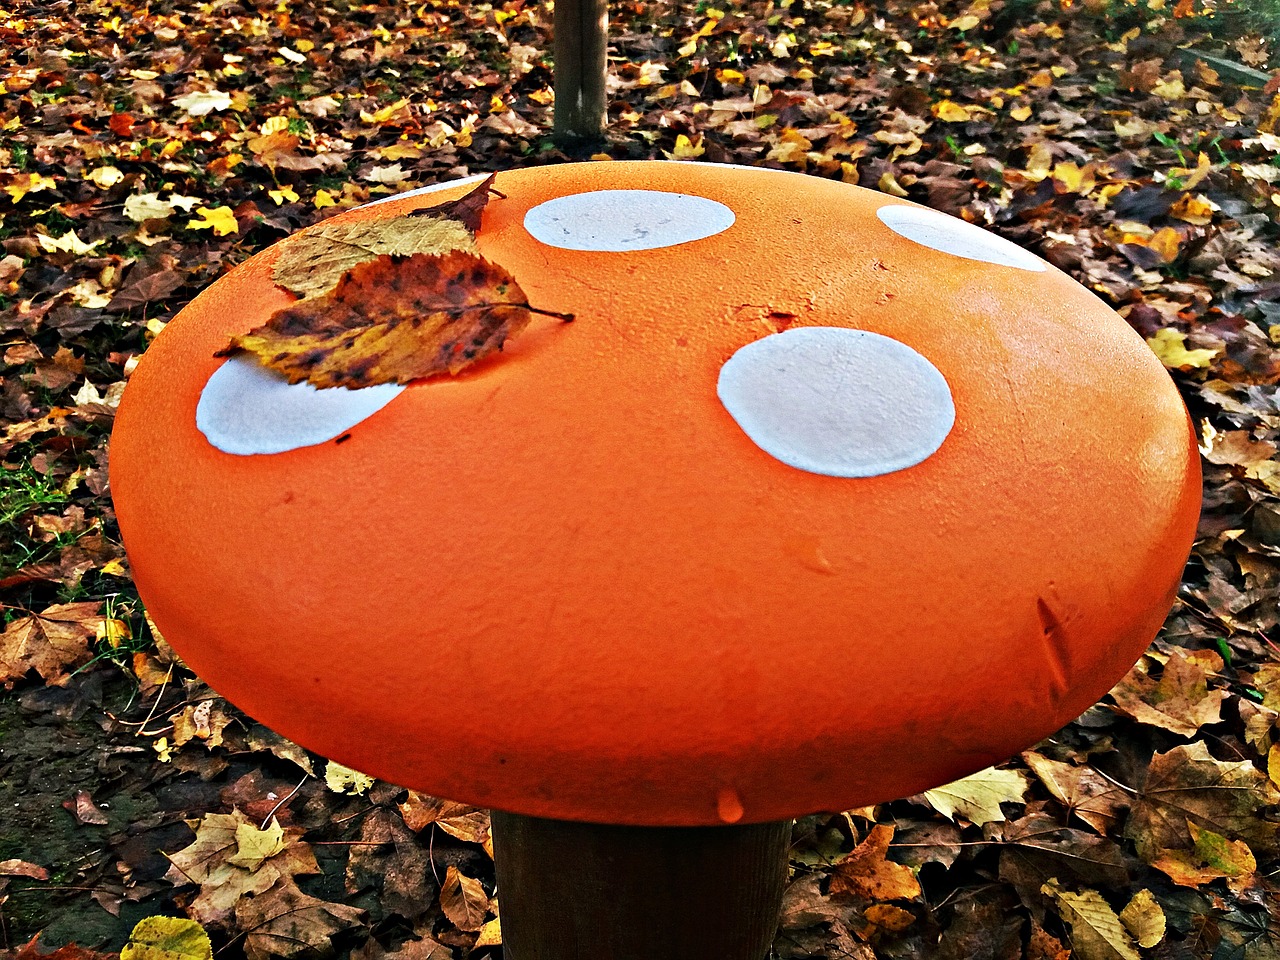 amanita autumn mushroom free photo